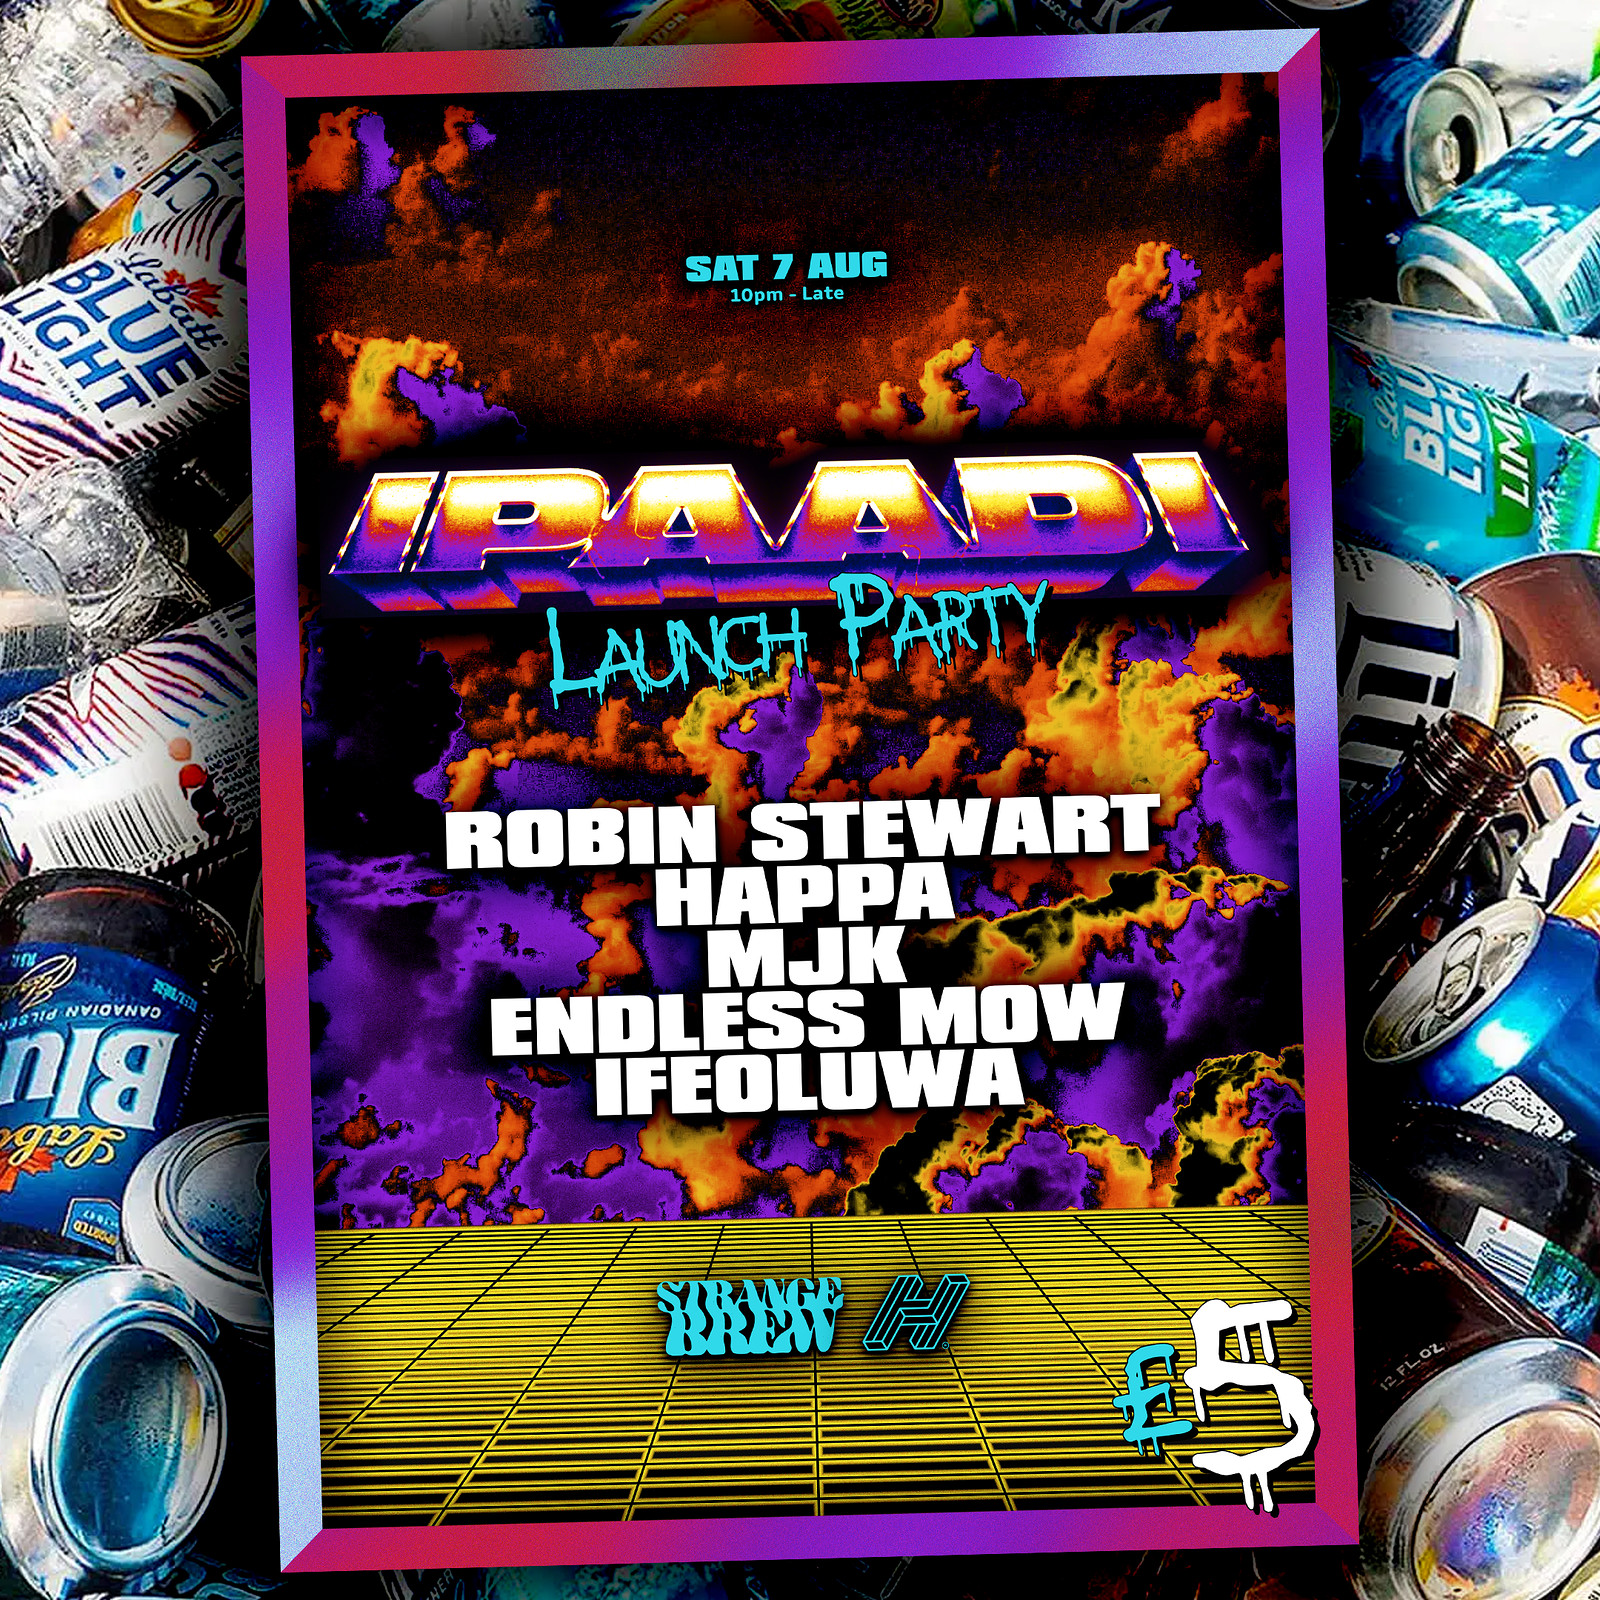 ipaadi release party w/ Robin Stewart & Happa at Strange Brew